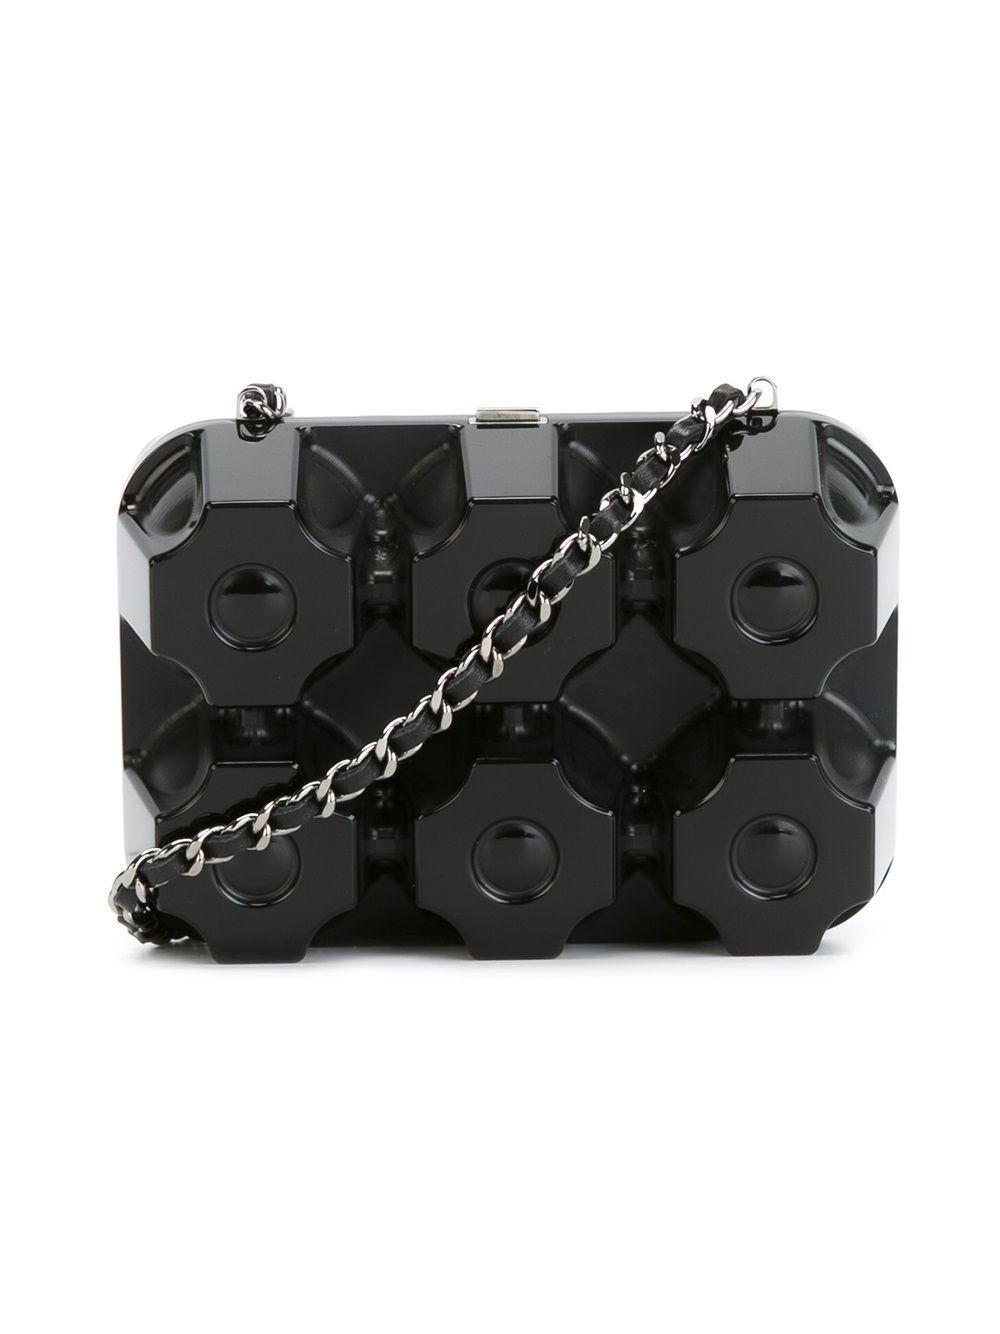 Chanel 2014 So Black Egg Carton Supermarket Minaudière Crossbody Jewelry Box  For Sale 4